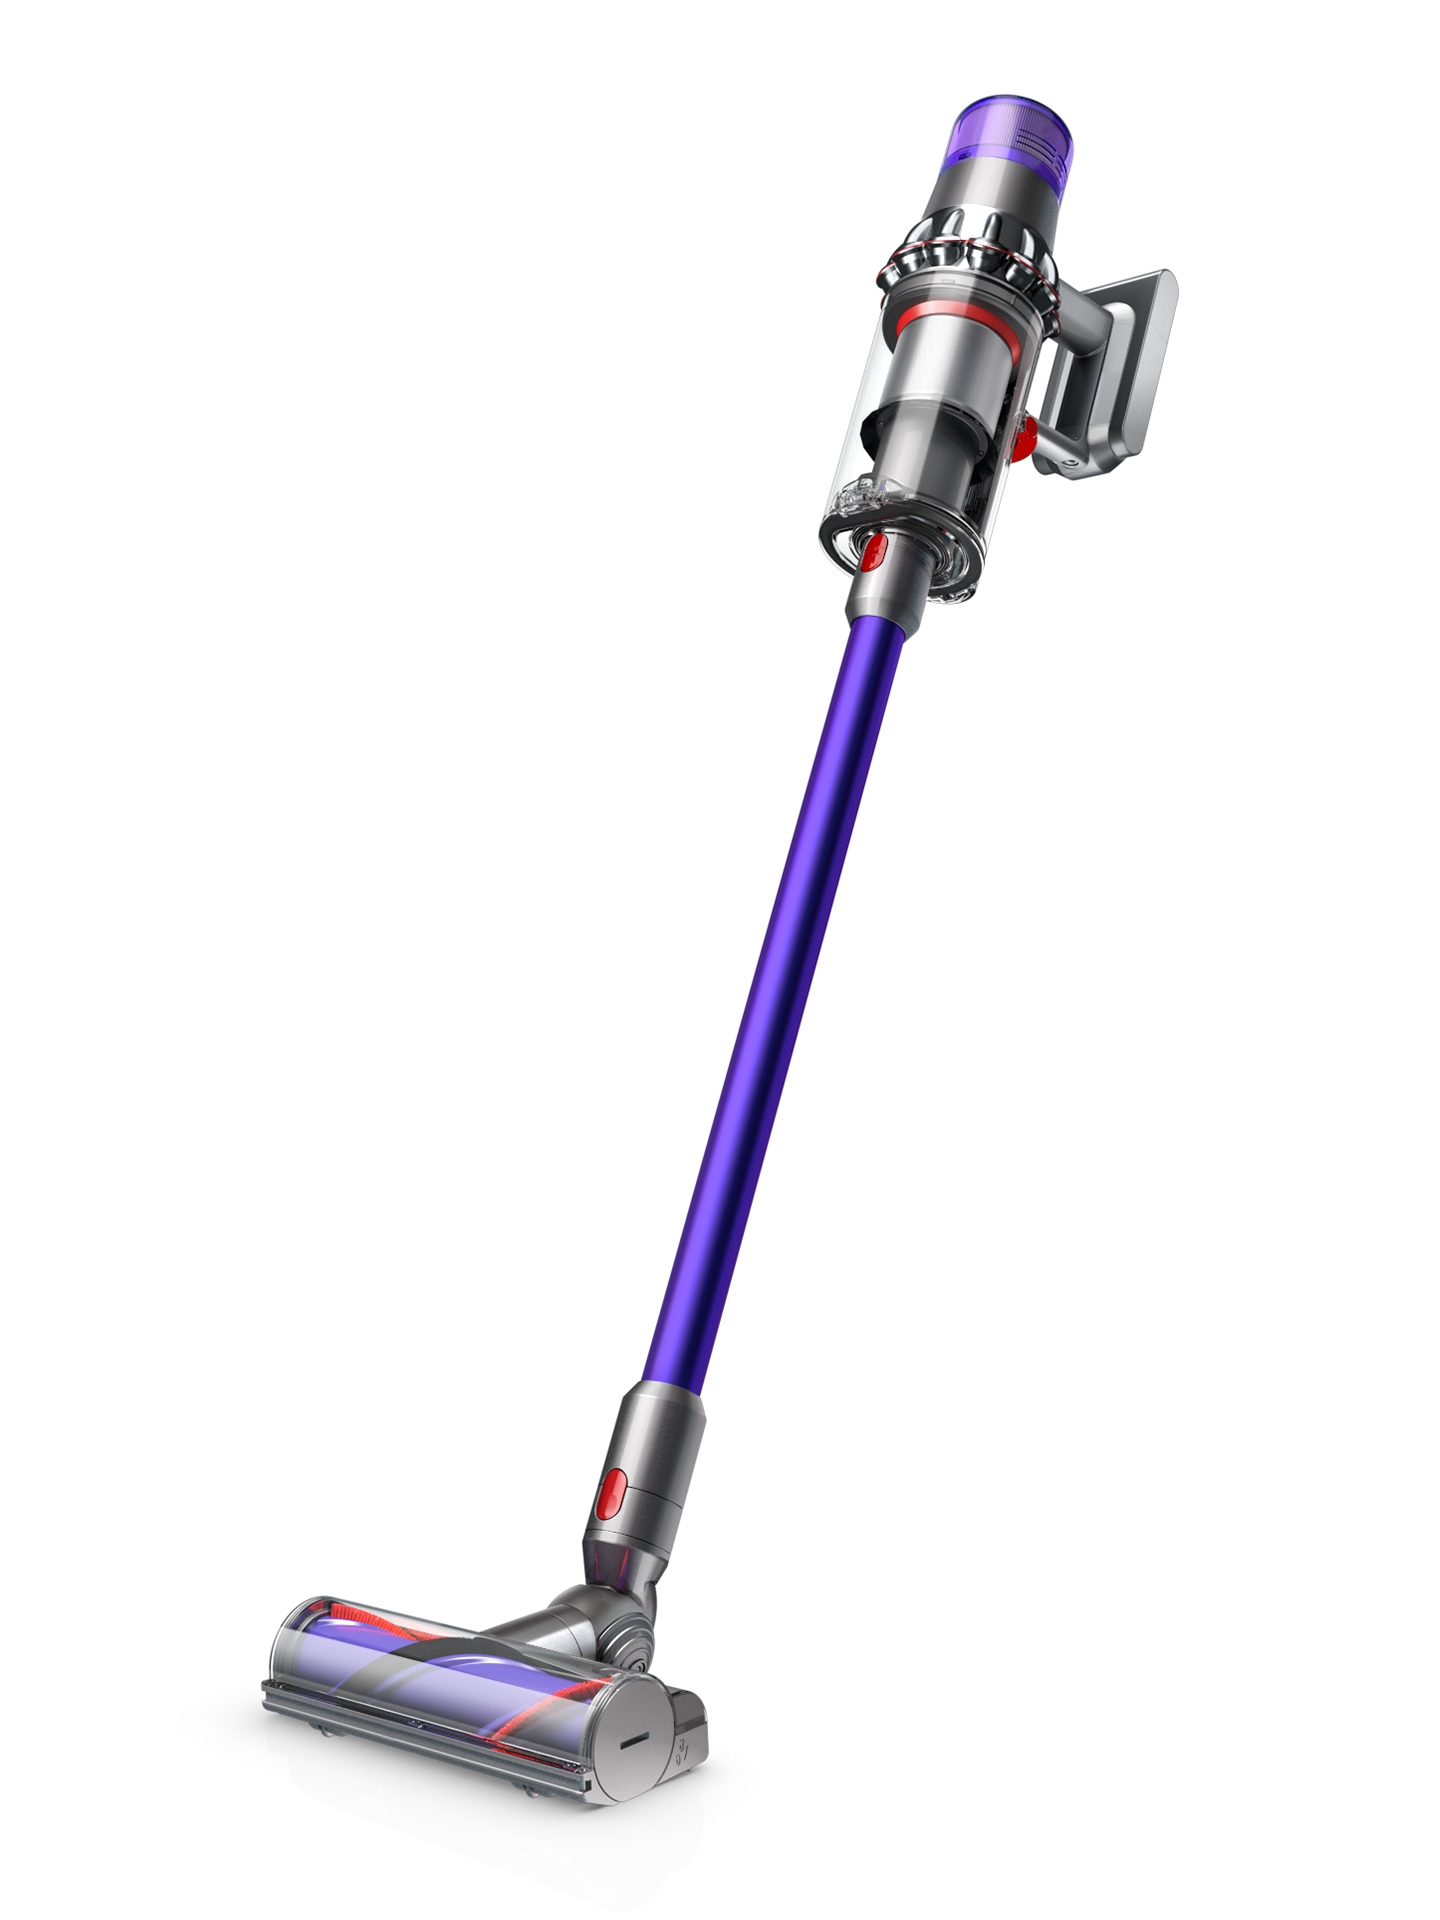 *Ex-Display* Dyson V11 Animal Cordless Vacuum Cleaner - Nickel/Purple